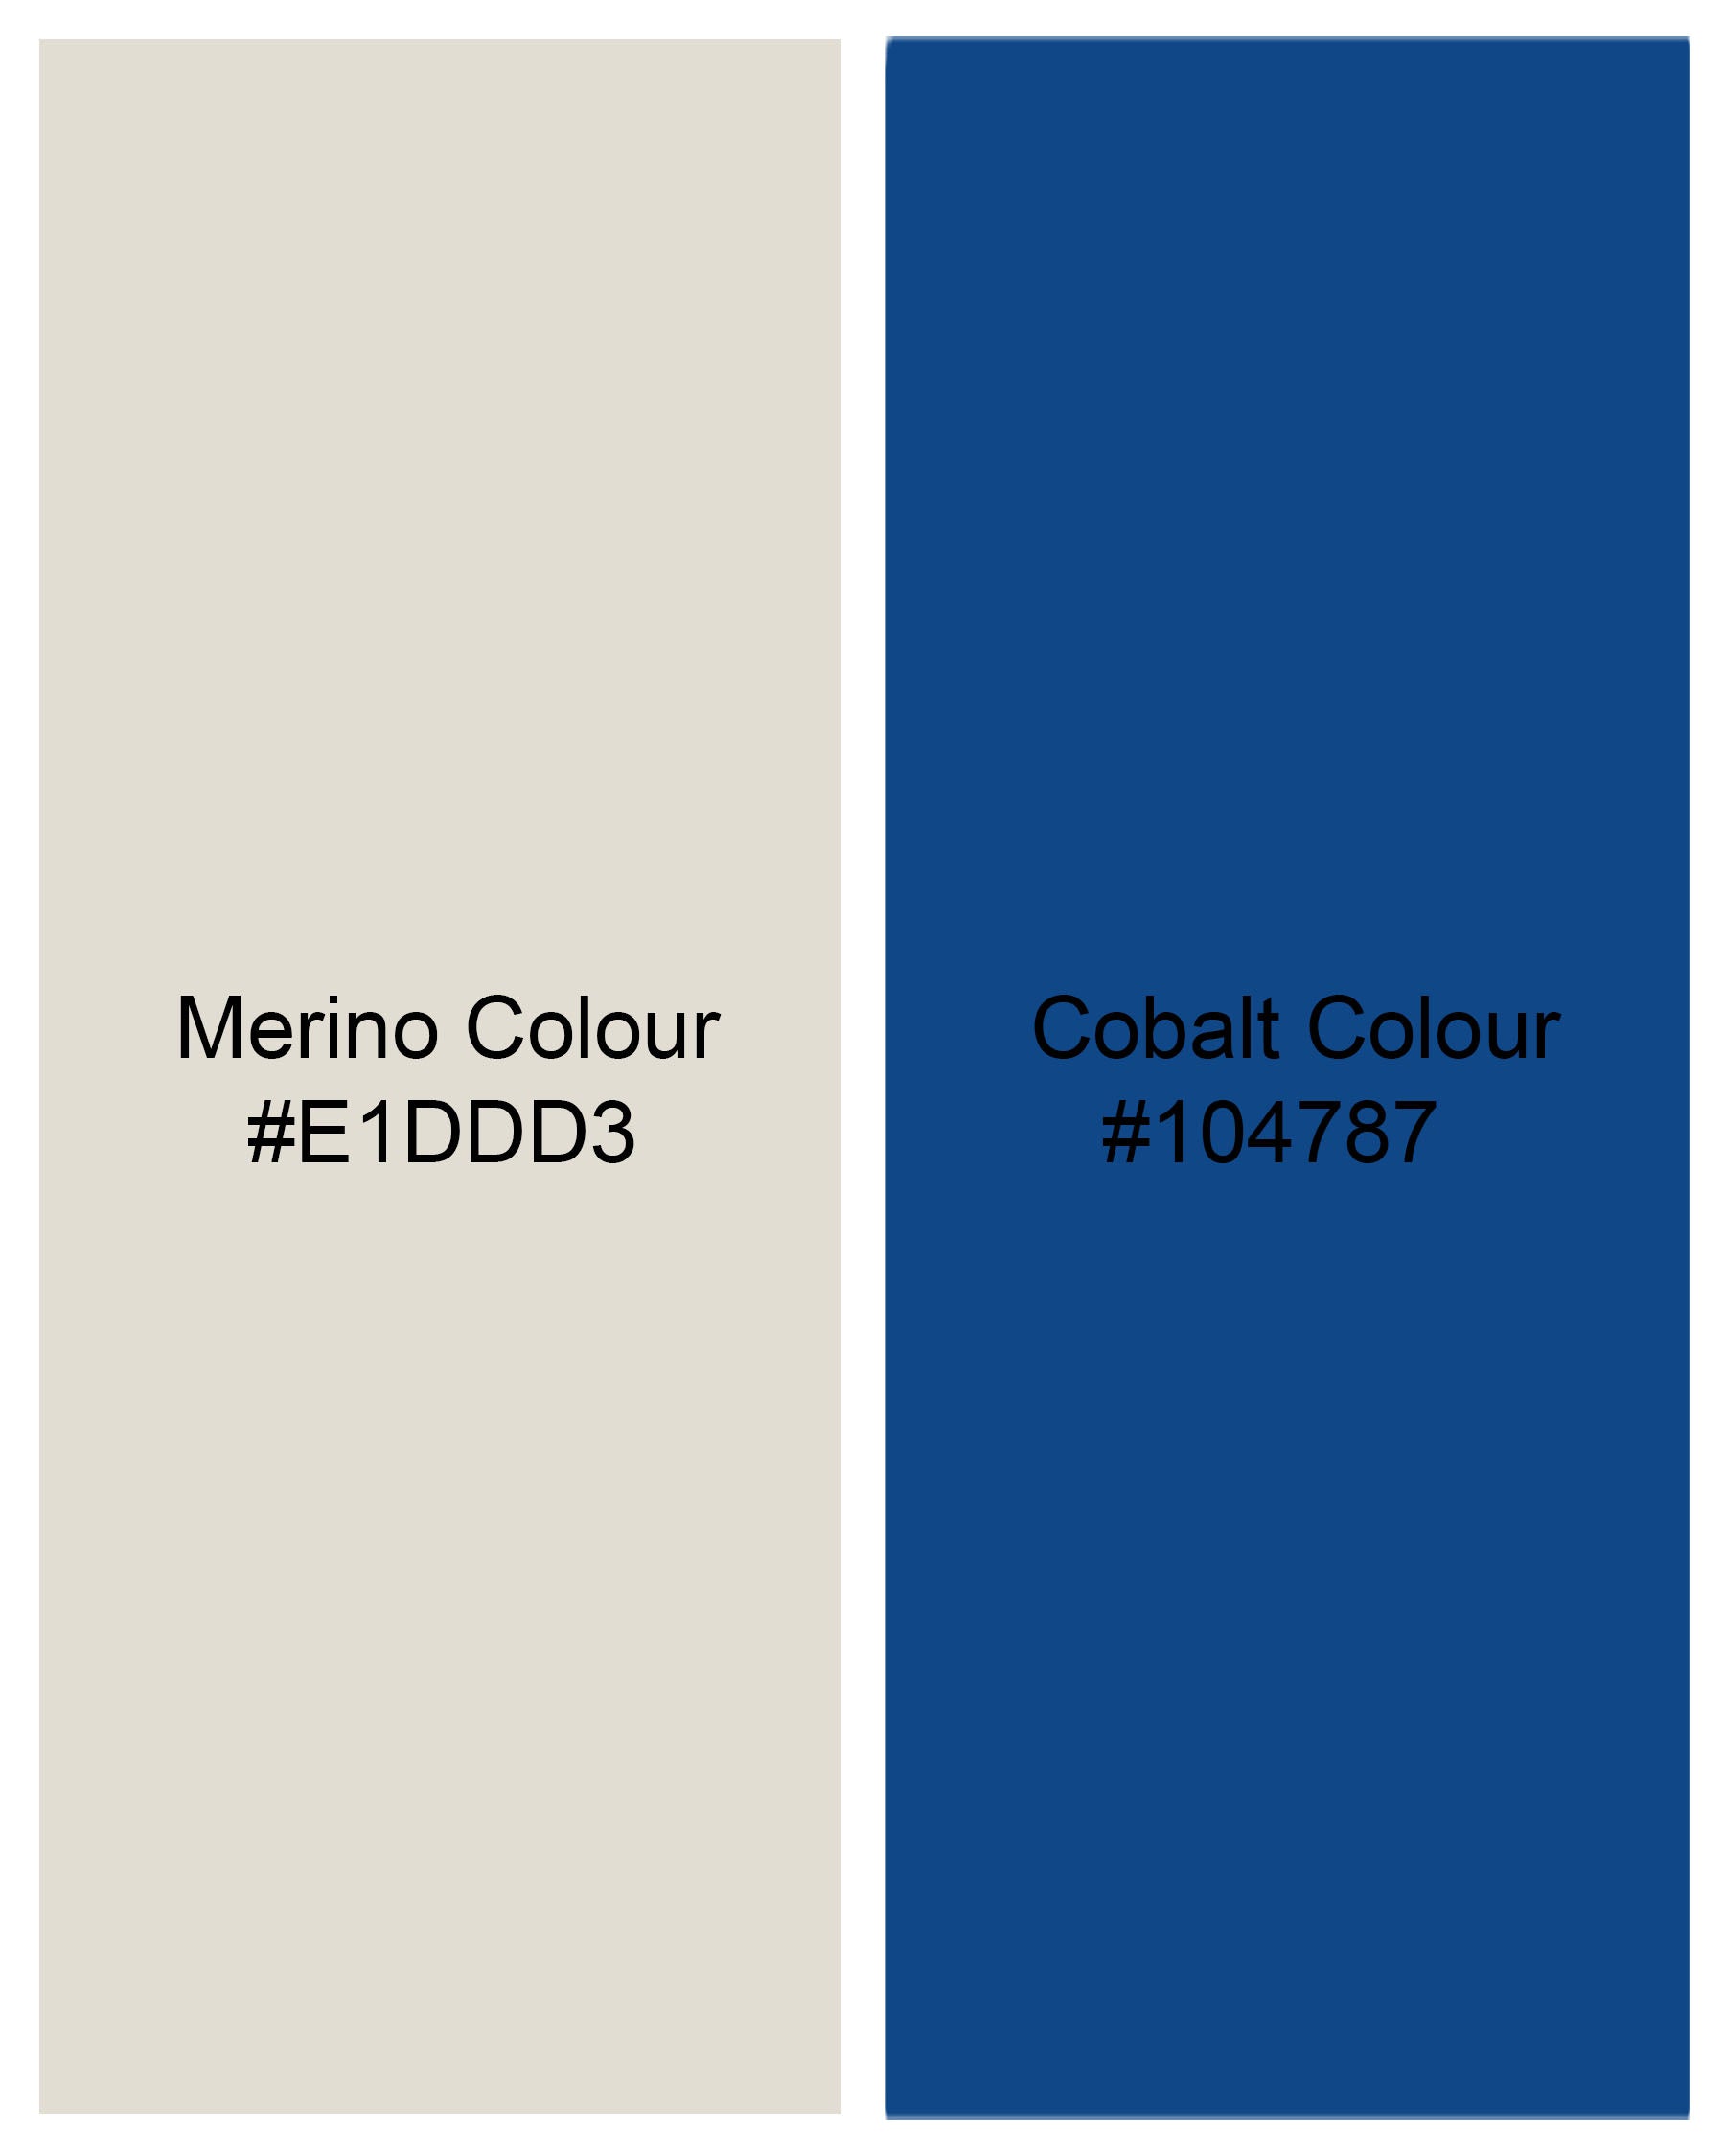 Merino Off White With Cobalt Blue Printed Chambray Premium Cotton Shirt 7886-CA -38,7886-CA -H-38,7886-CA -39,7886-CA -H-39,7886-CA -40,7886-CA -H-40,7886-CA -42,7886-CA -H-42,7886-CA -44,7886-CA -H-44,7886-CA -46,7886-CA -H-46,7886-CA -48,7886-CA -H-48,7886-CA -50,7886-CA -H-50,7886-CA -52,7886-CA -H-52